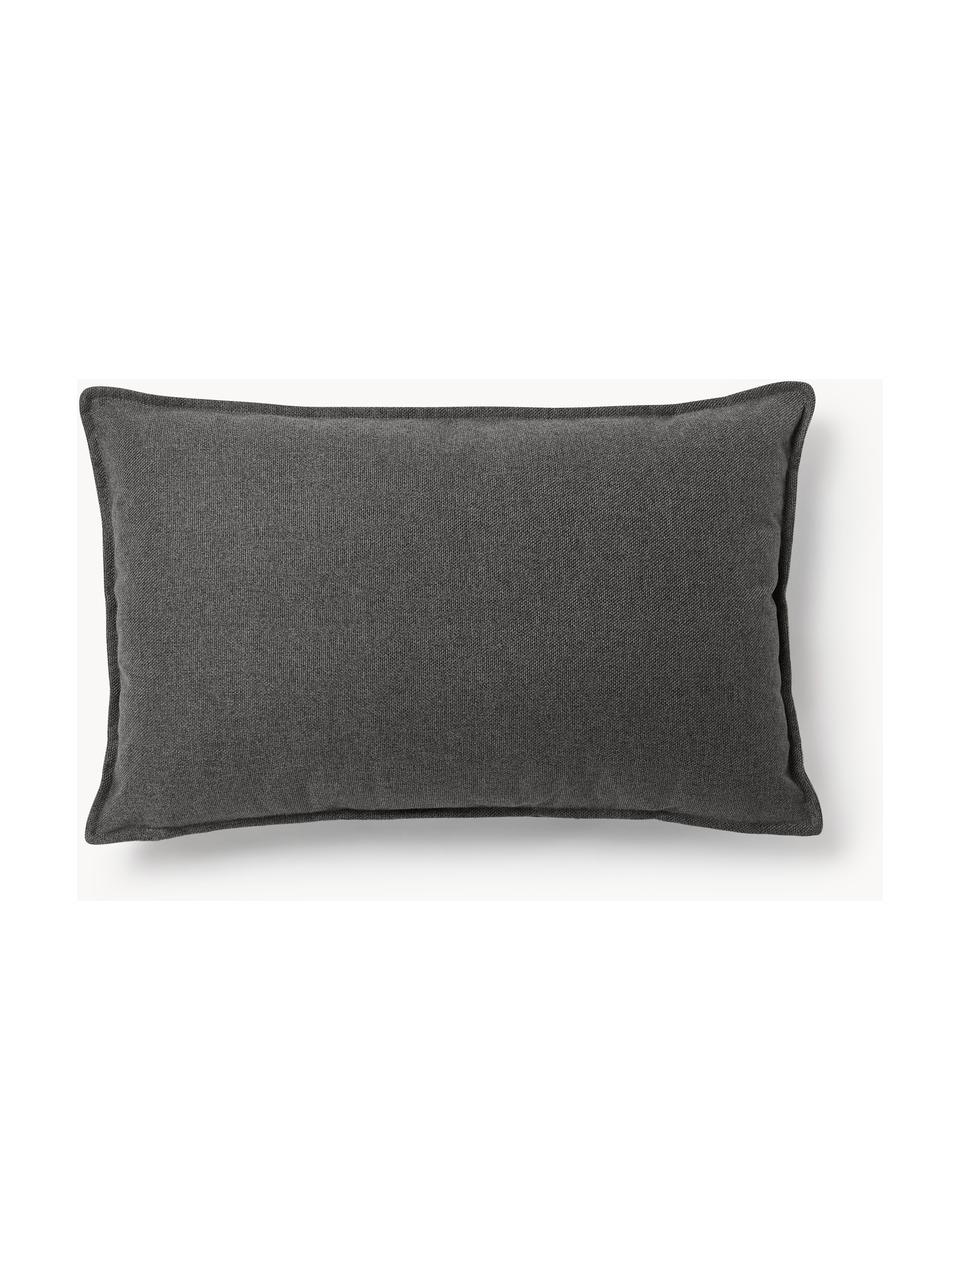 Cojín sofá Lennon, Funda: 100% poliéster, Tejido gris antracita, An 50 x L 80 cm